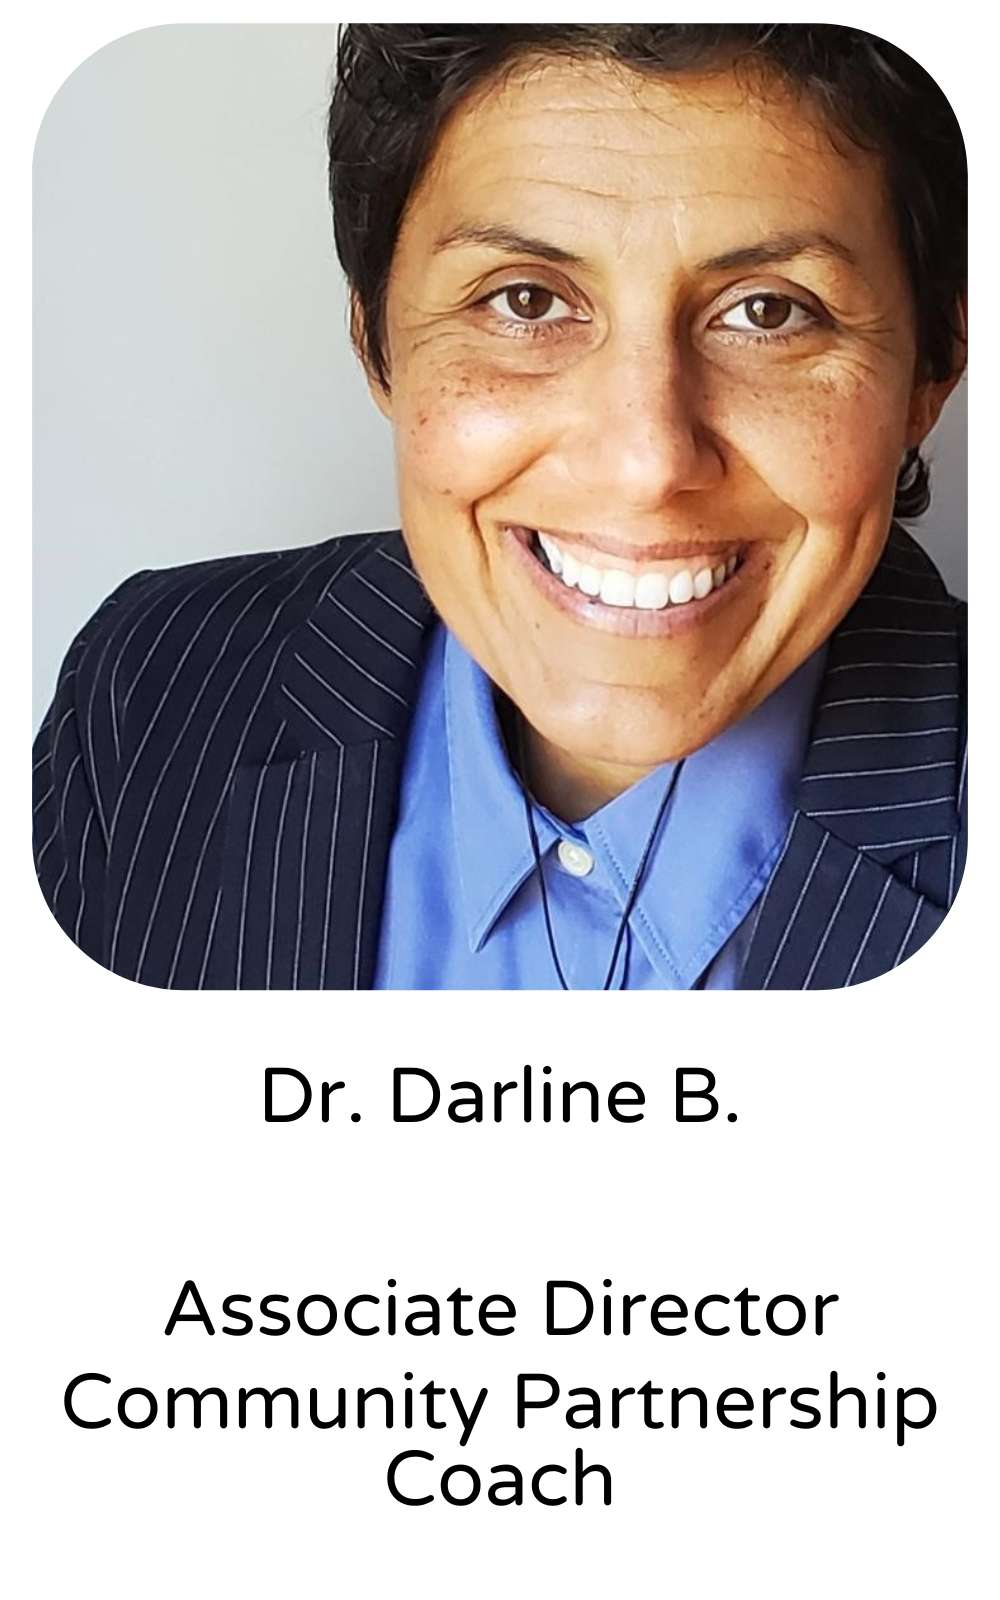 Dr. Darline B, Associate Director, Community Partnership Coach